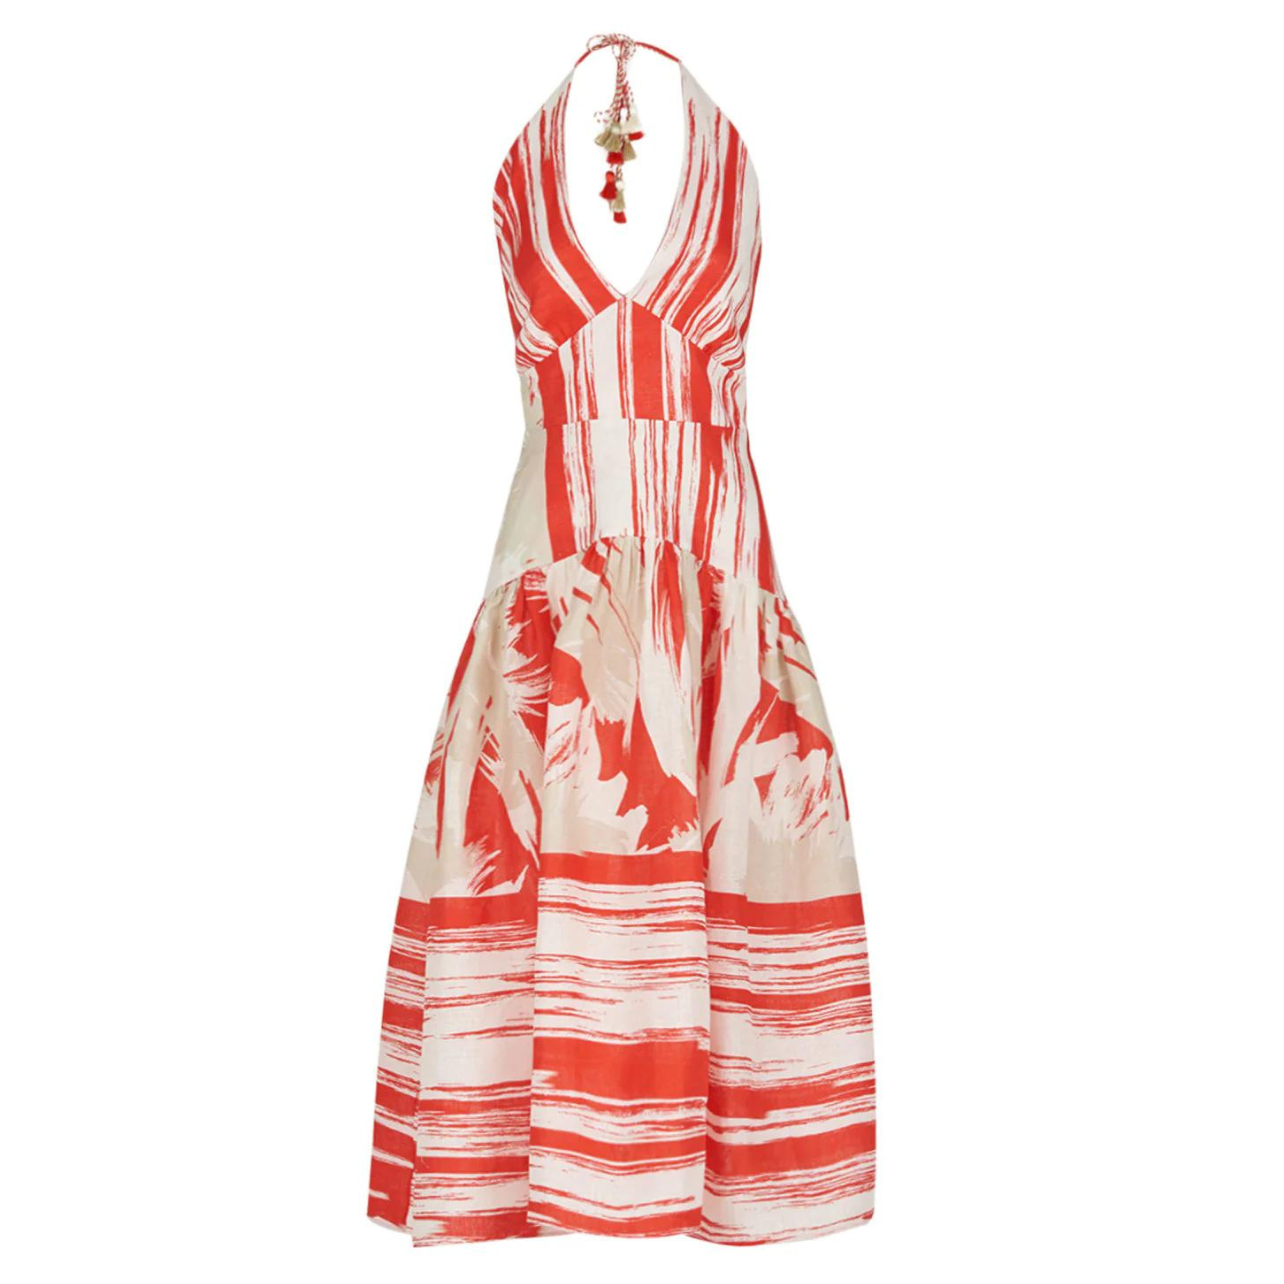 Silvia Tcherassi coral red palm printed halter dress